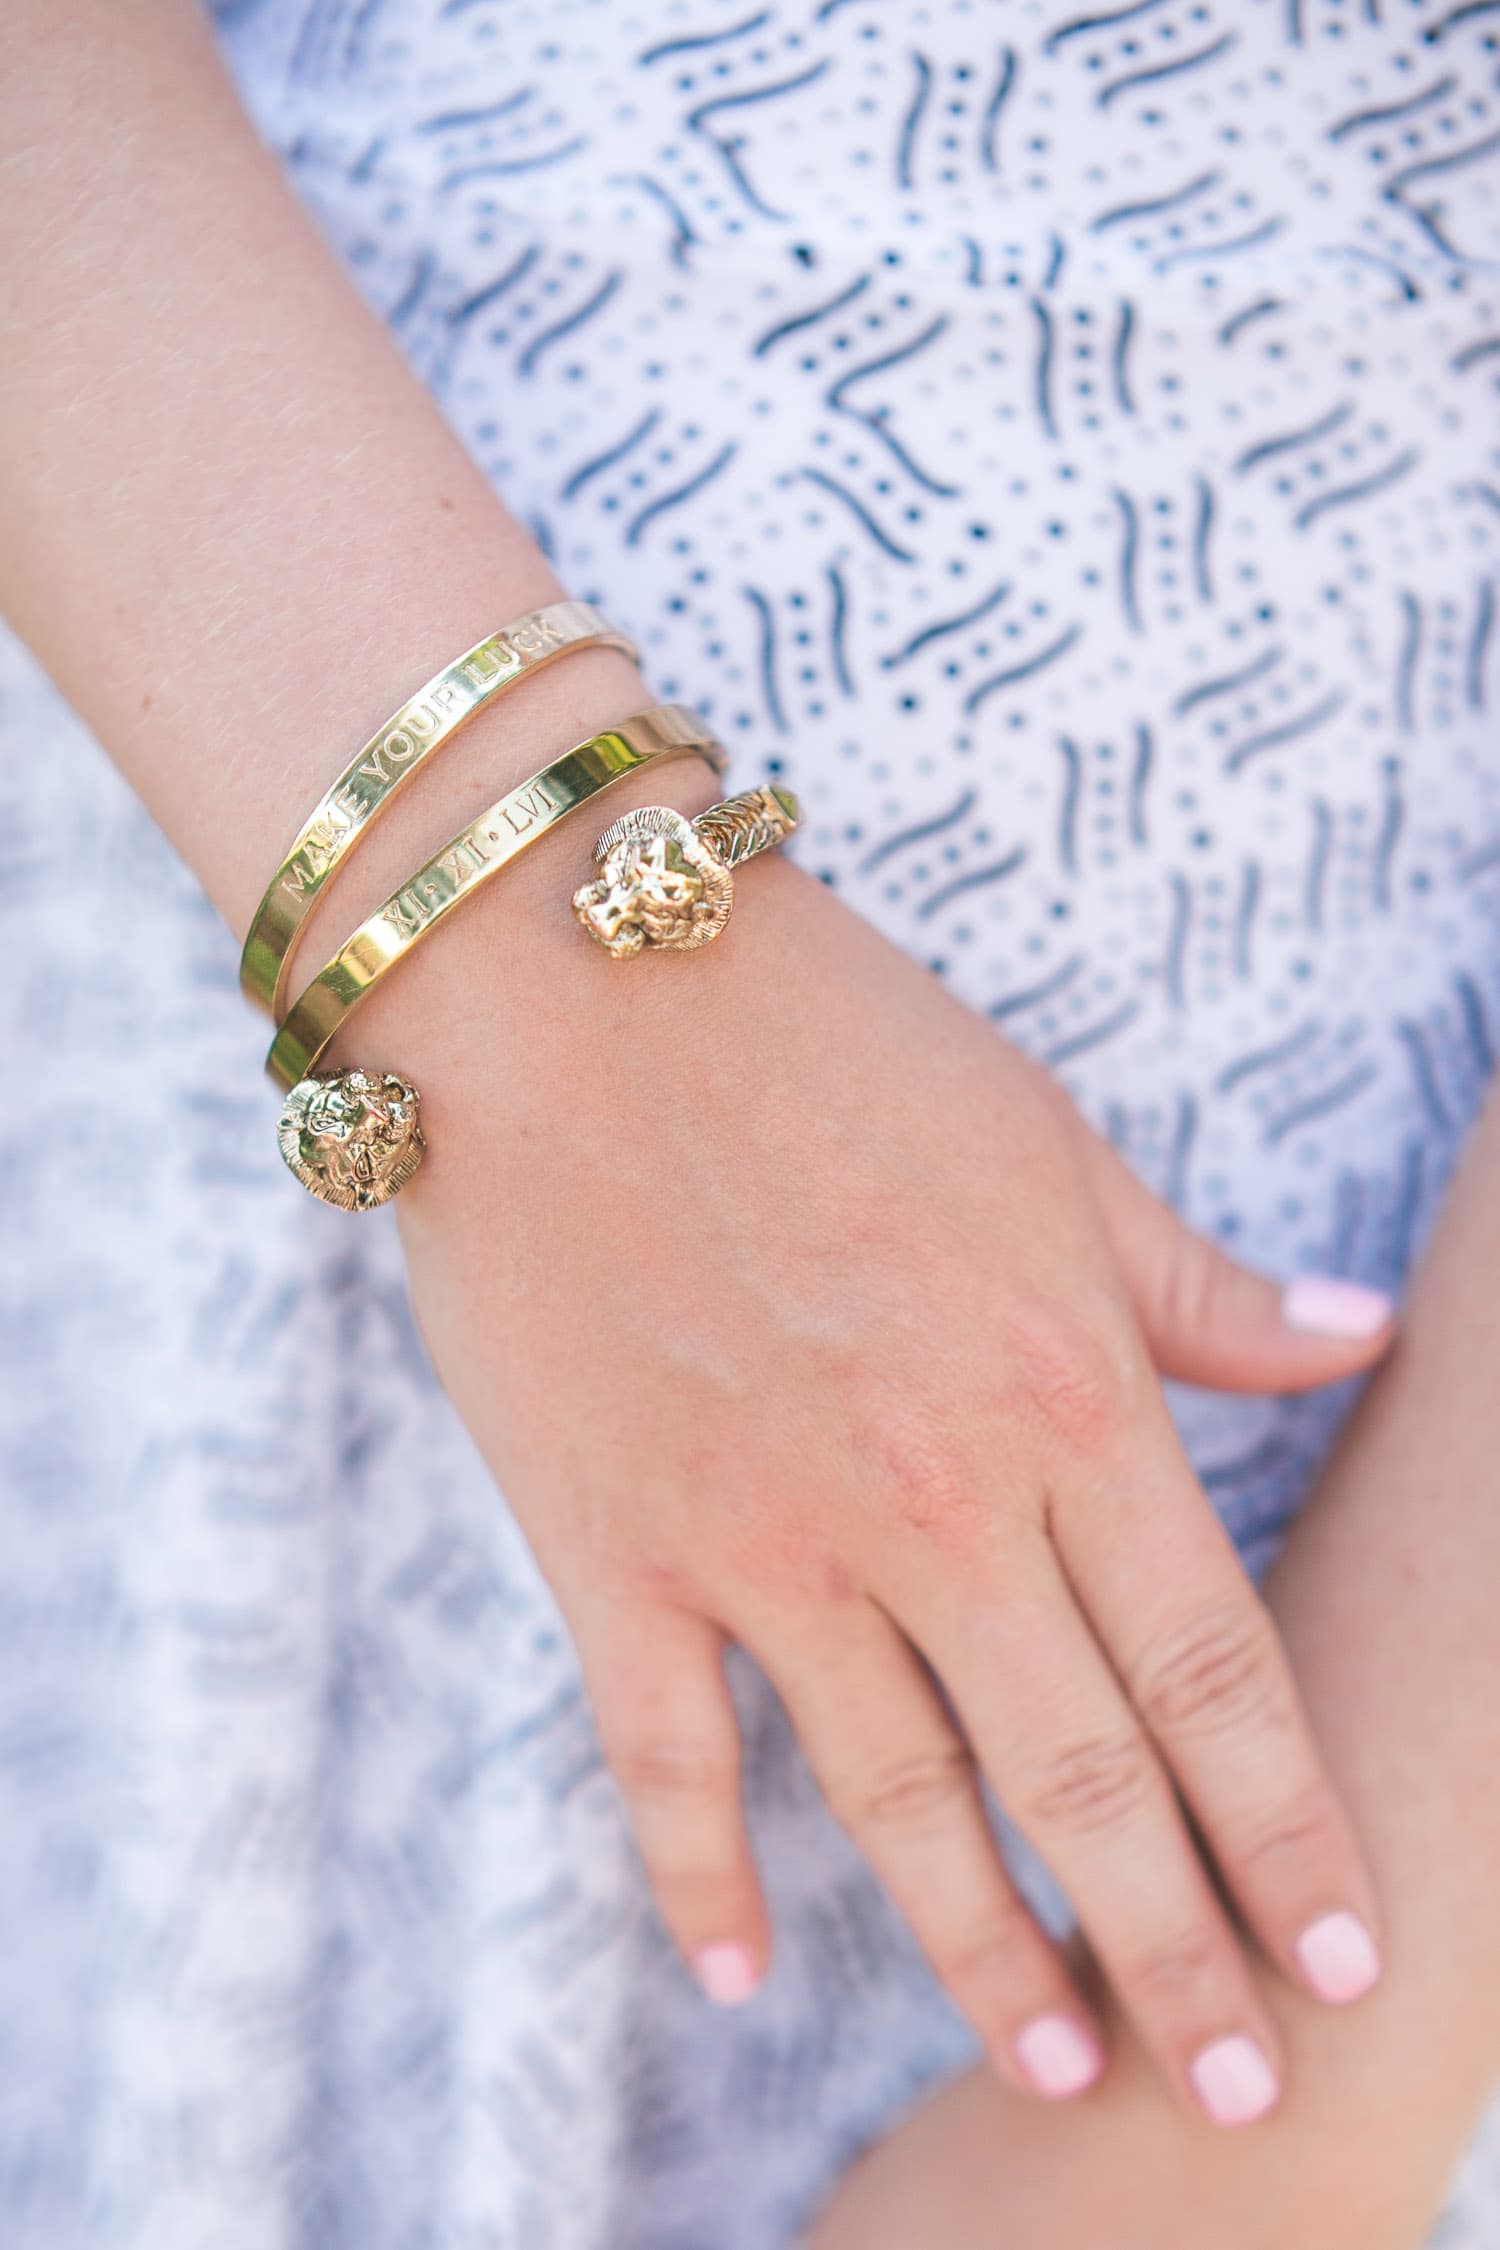 cute off the shoulder dress under $40 for summer or spring pregnancy gold jeweley | fashion blogger Ashley Brooke Nicholas